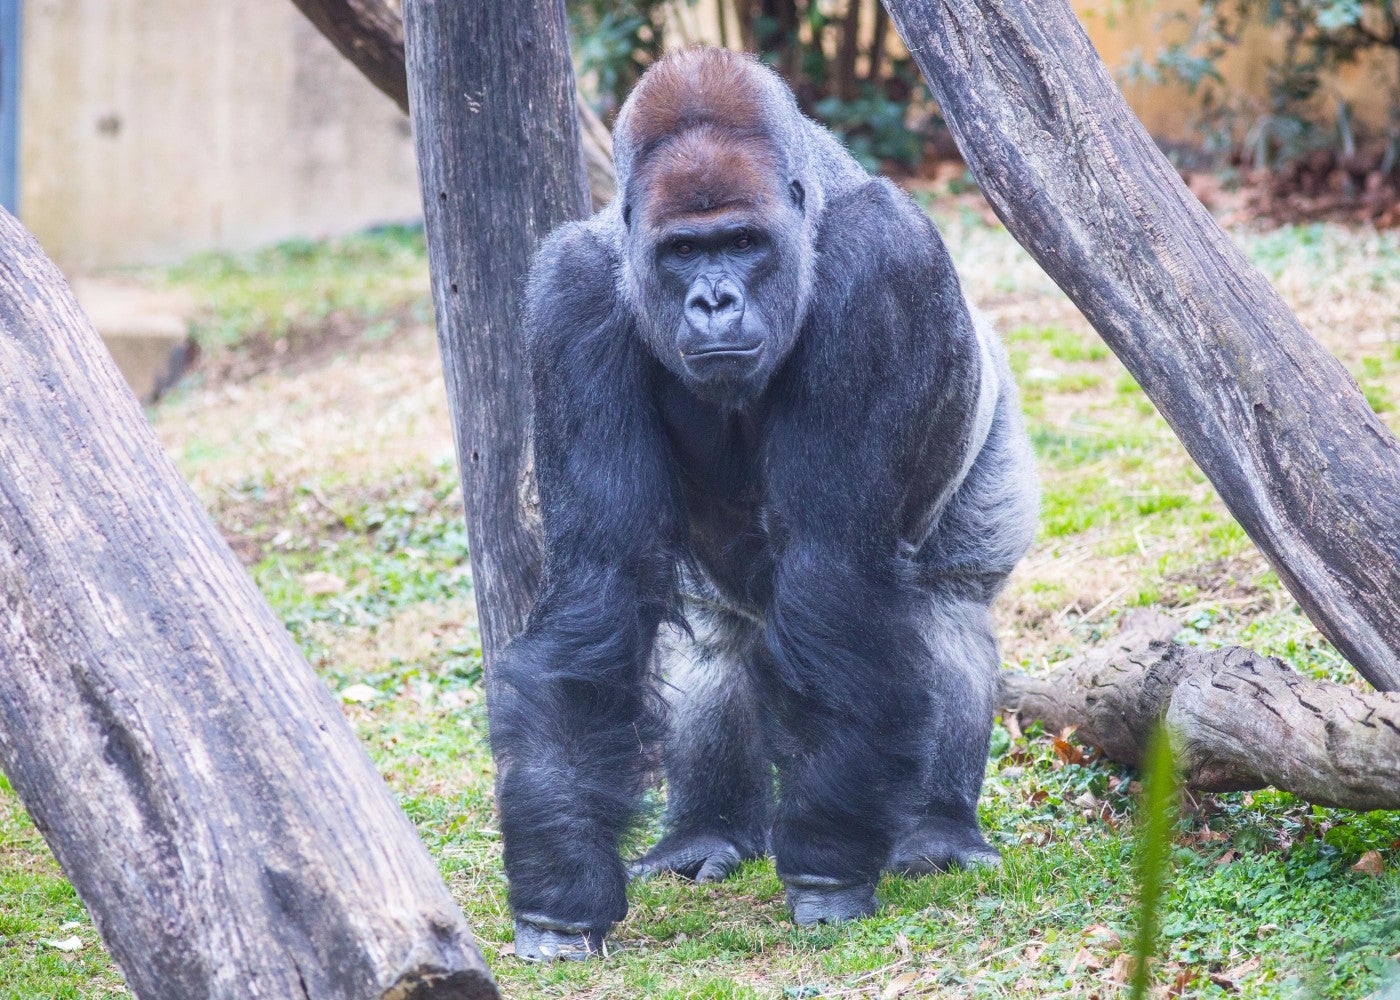 Western lowland gorilla Baraka explores the outdoor habitat.